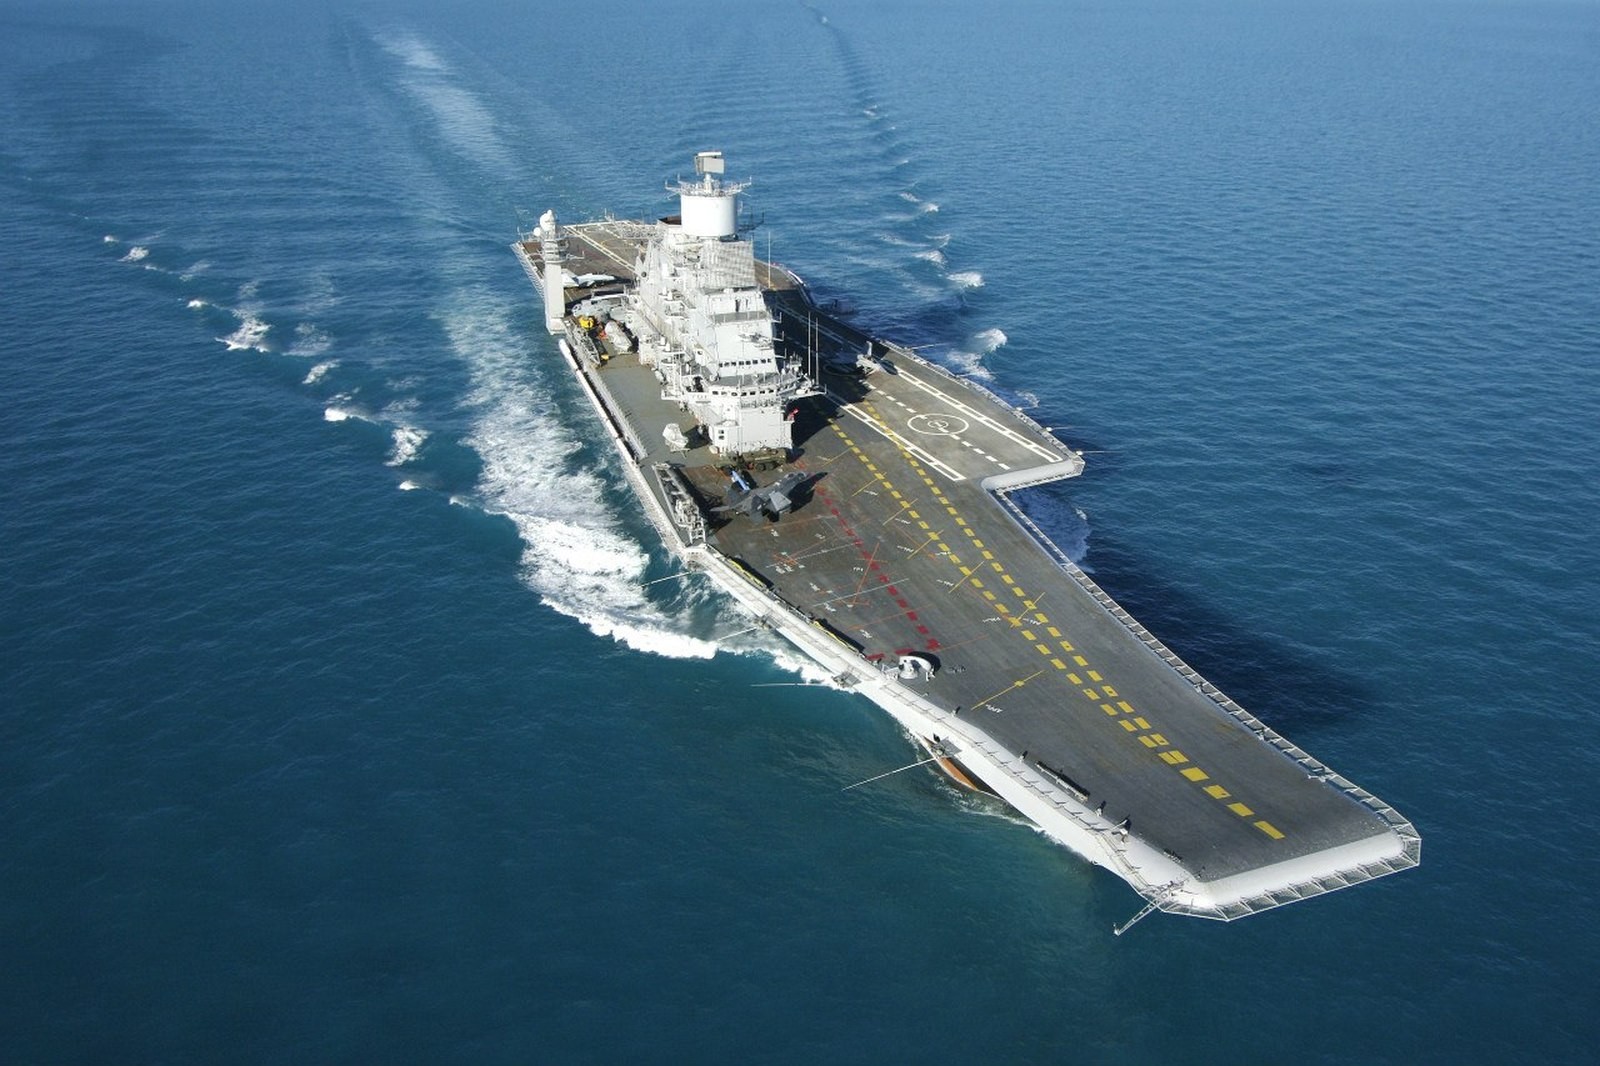 aircraft carrier ins vikramaditya Wallpaper